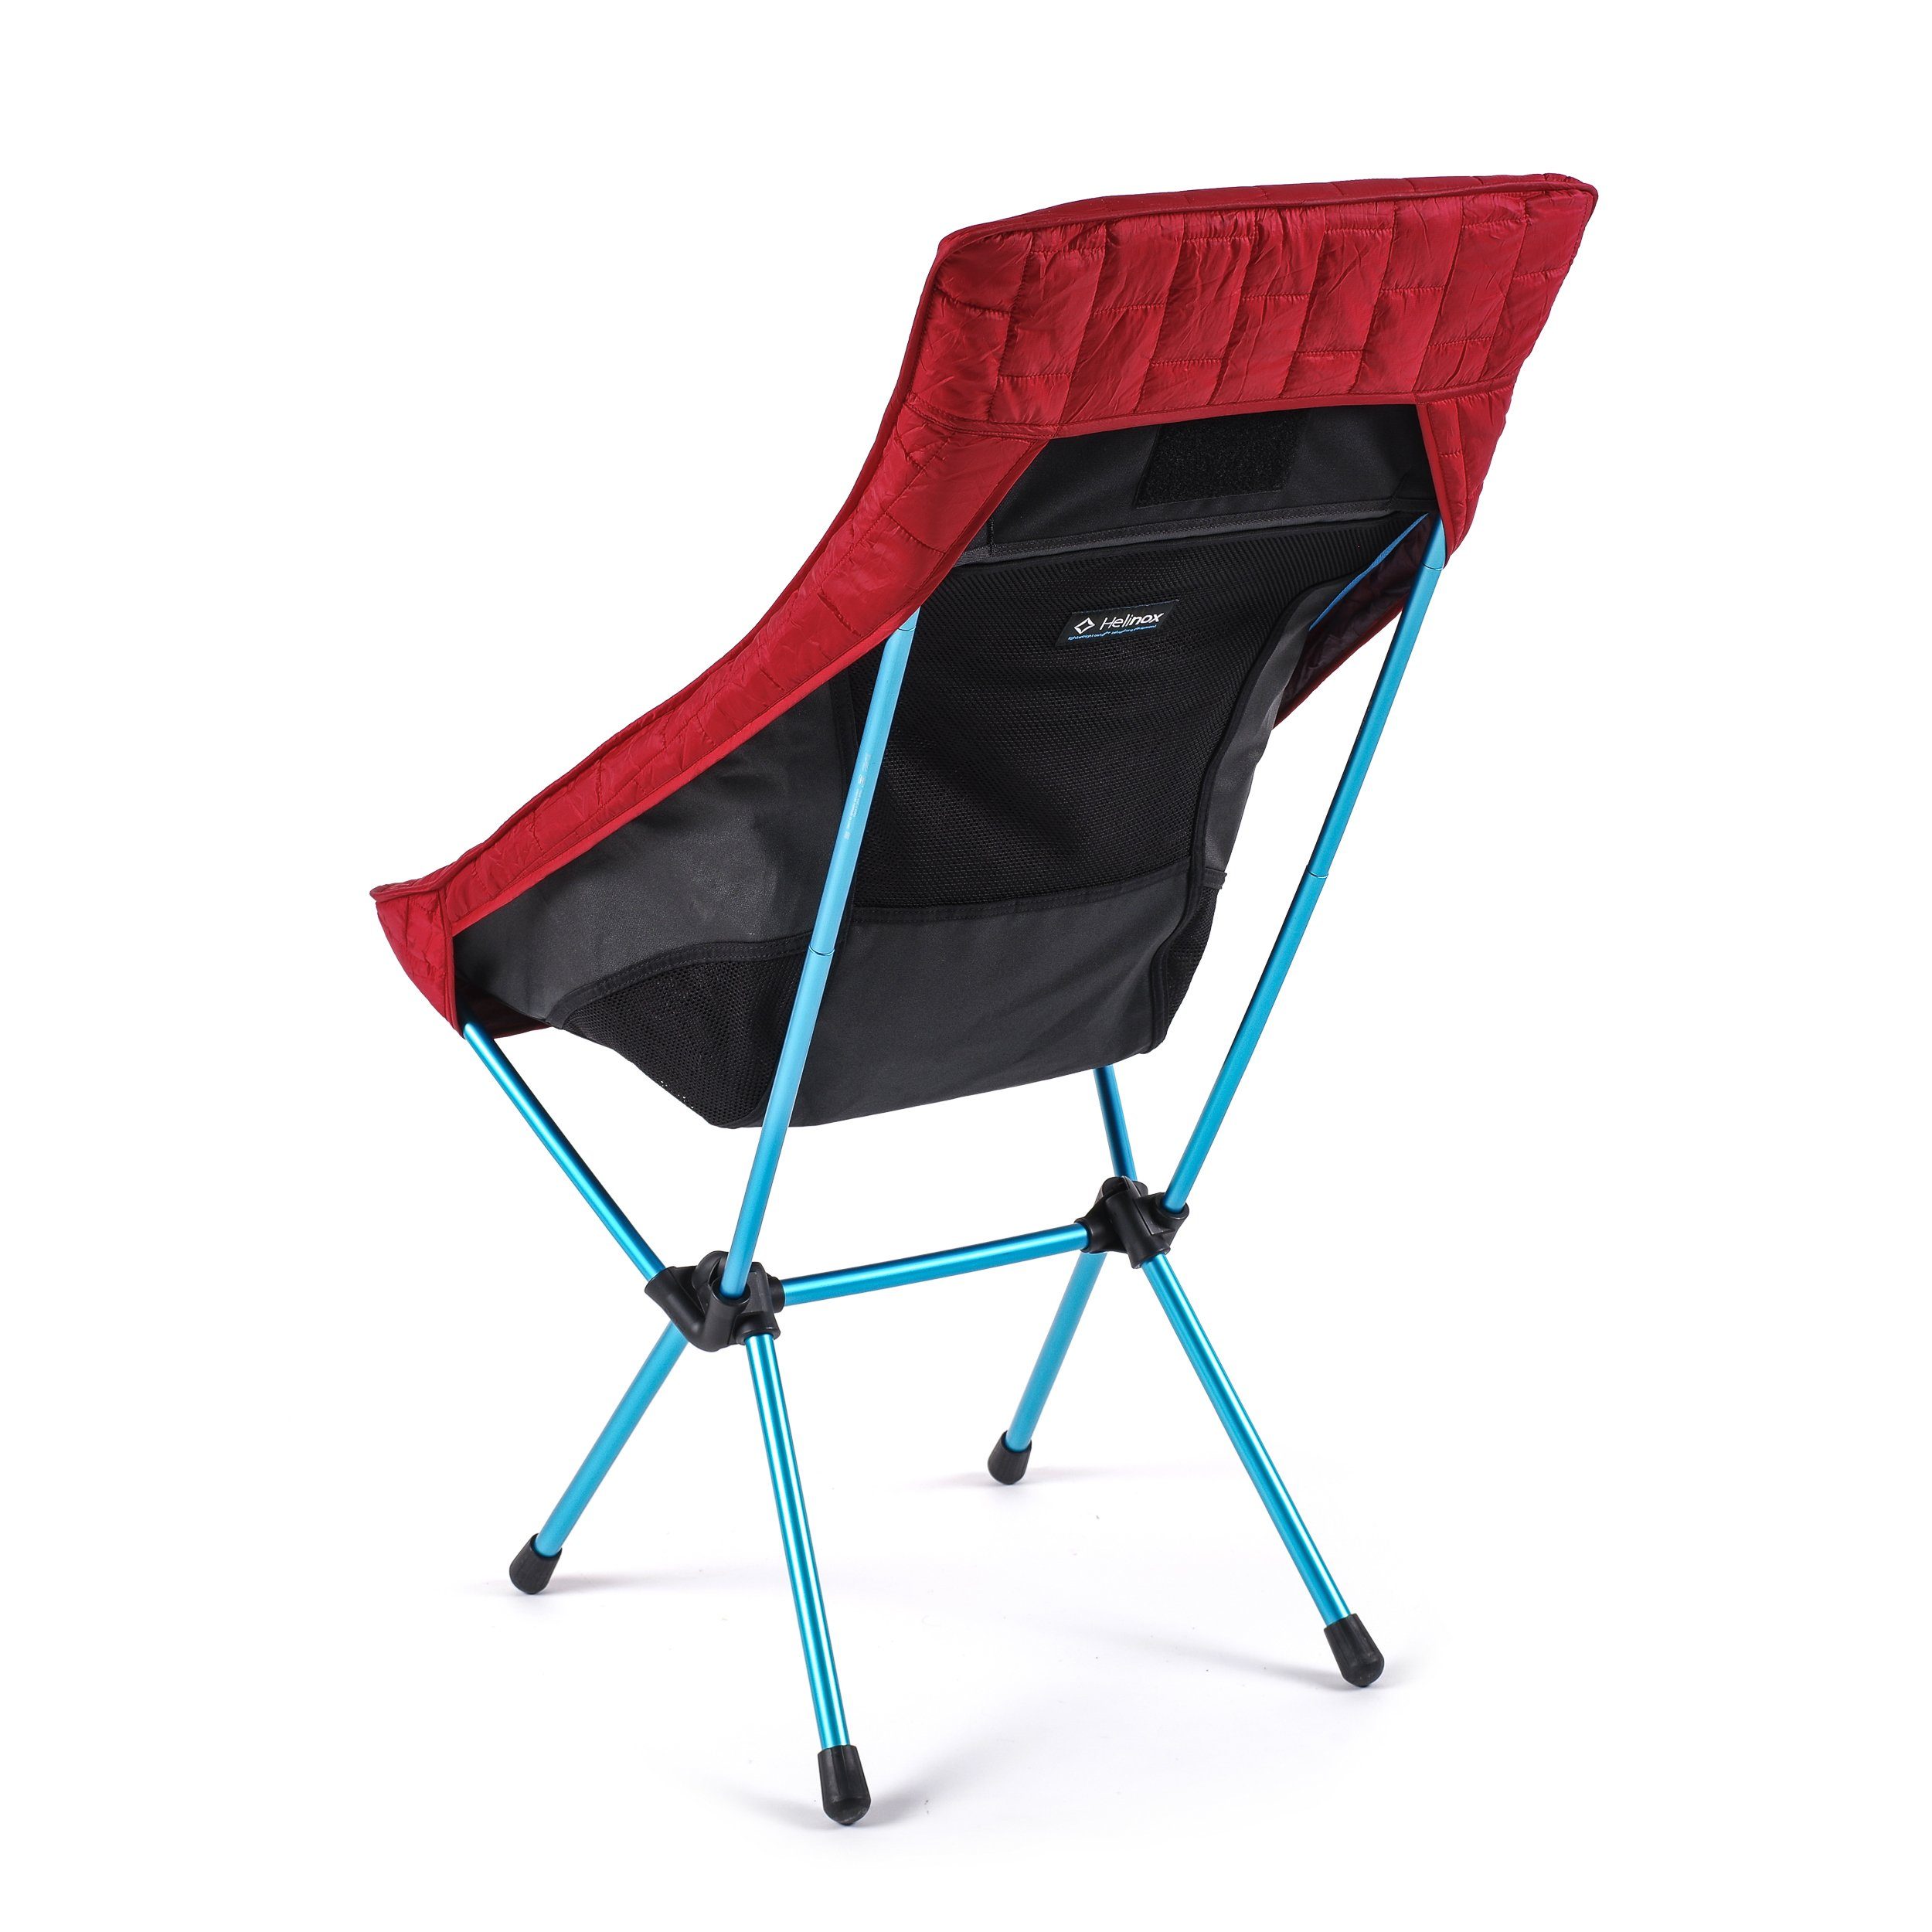 Helinox Sitzauflage Helinox Beach & Seat Scarlet Sunset for Chair Warmer